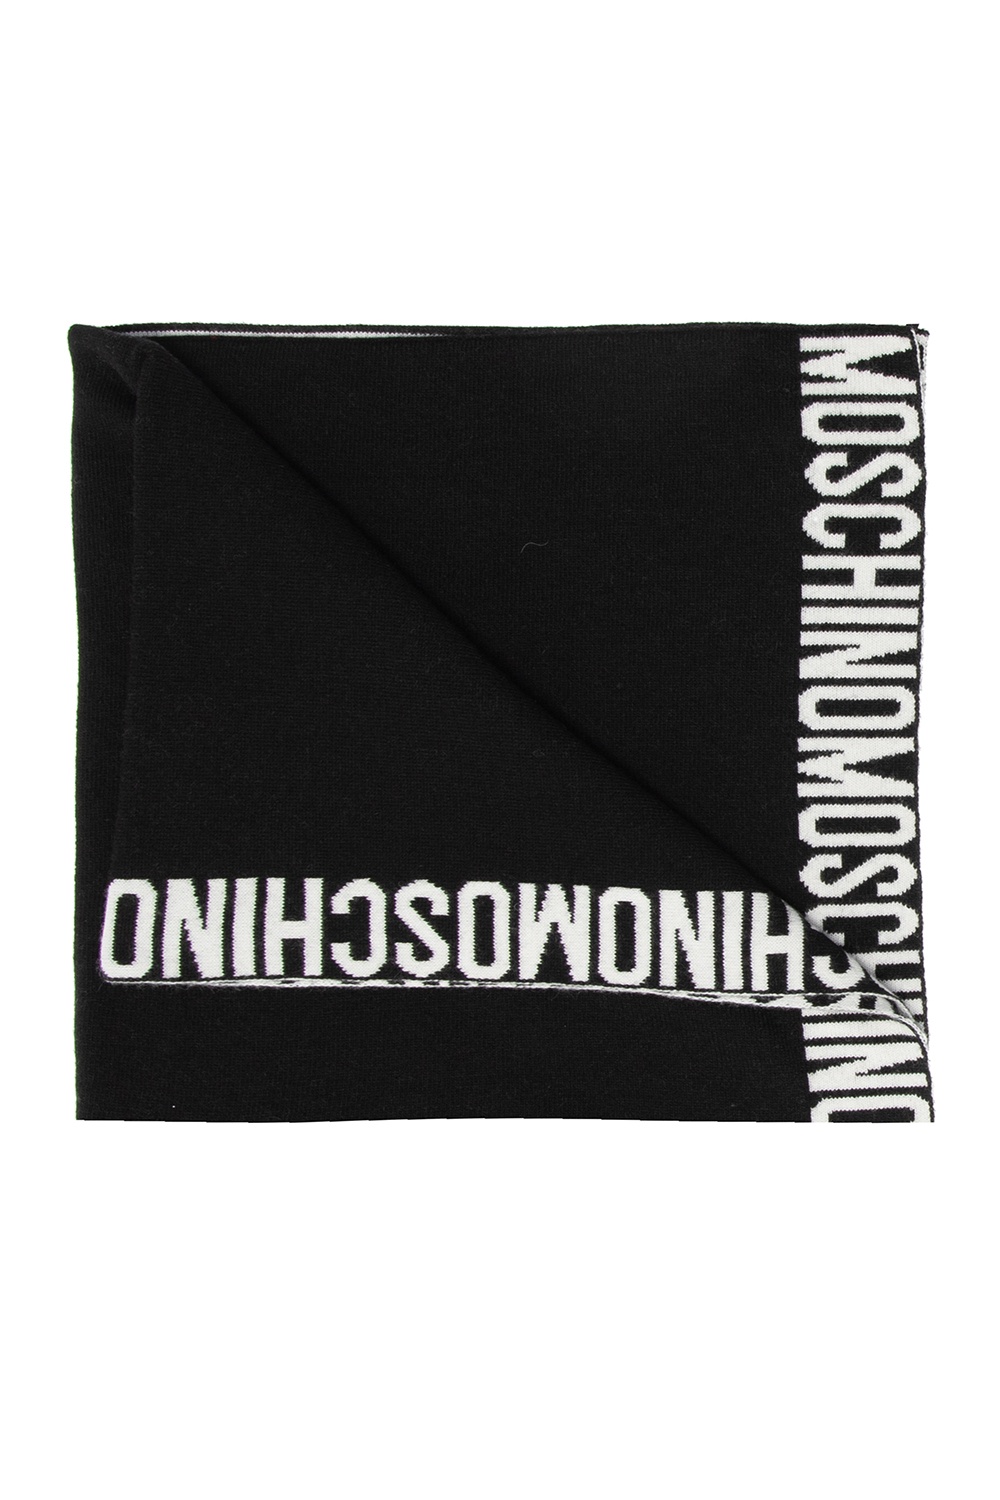 moschino logo scarf